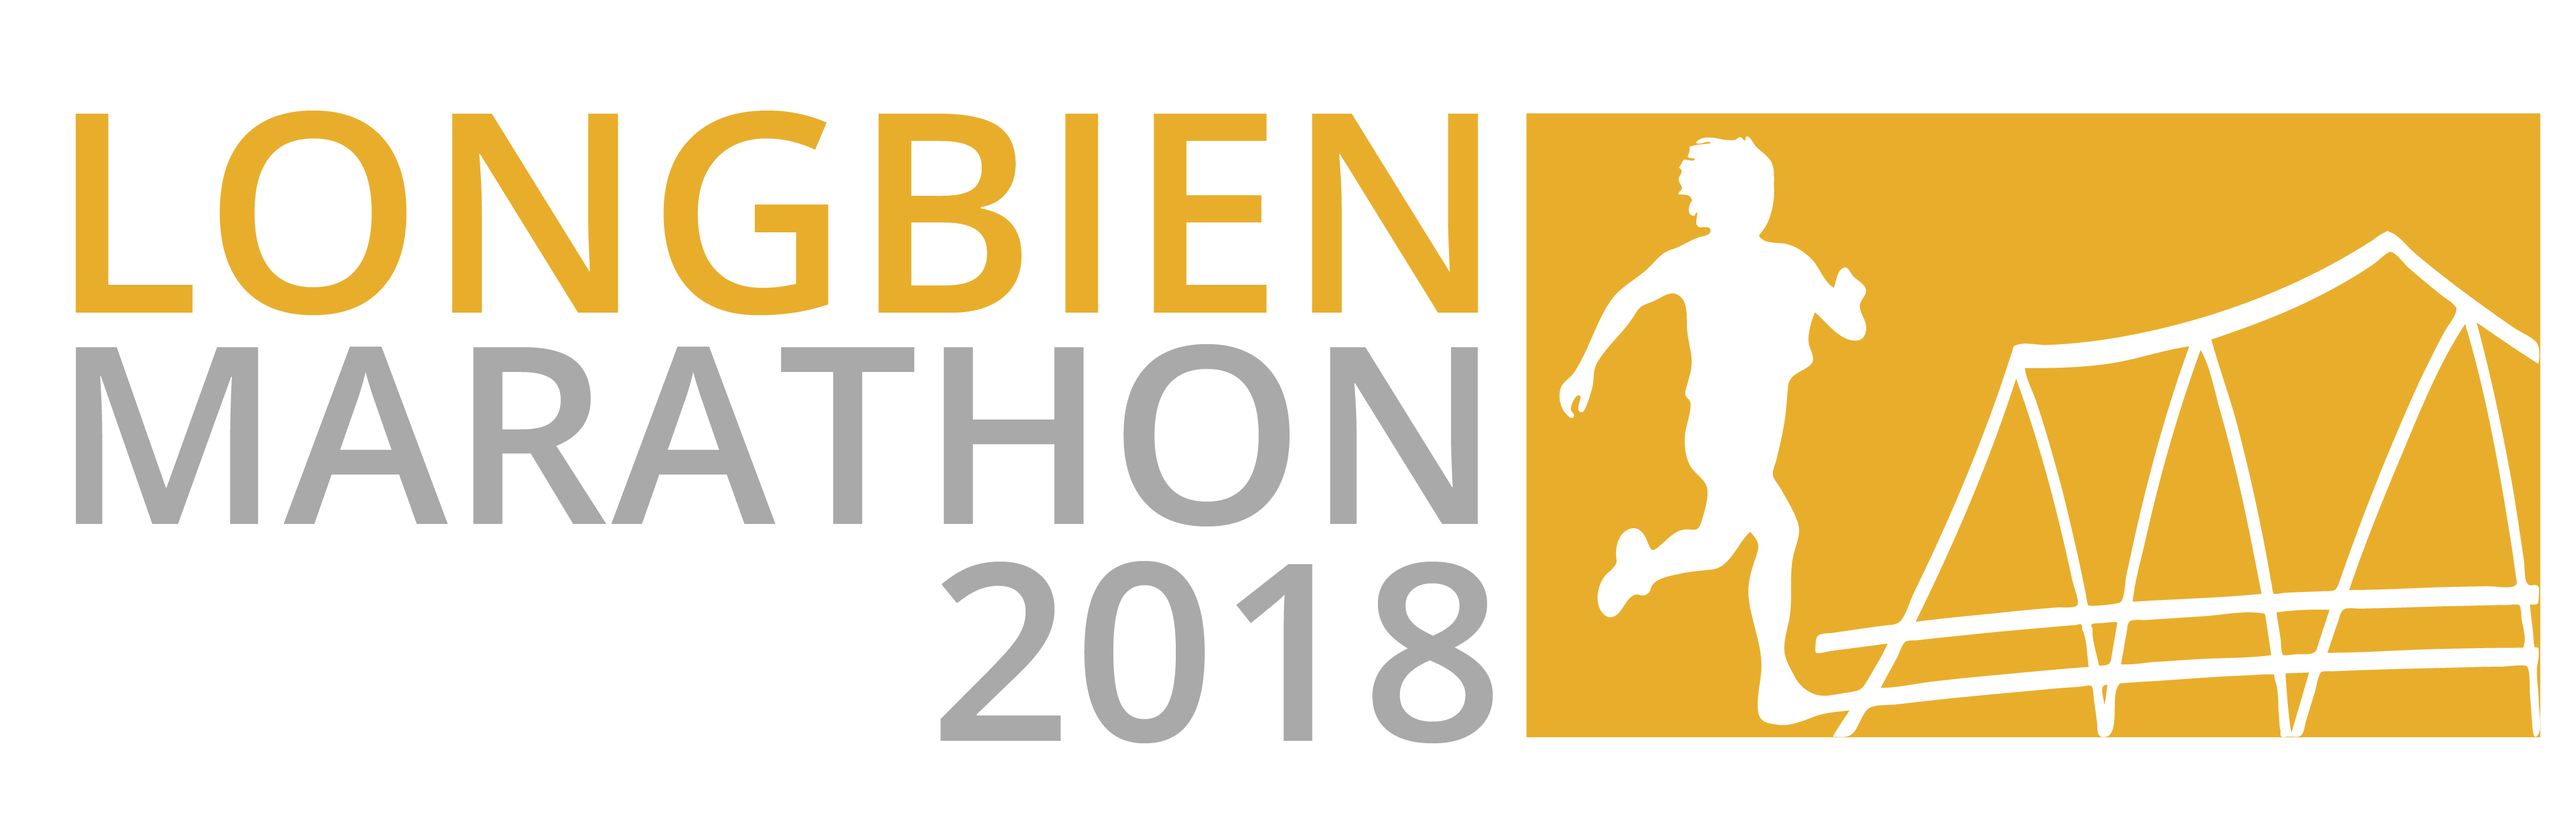 Longbien Marathon 2018